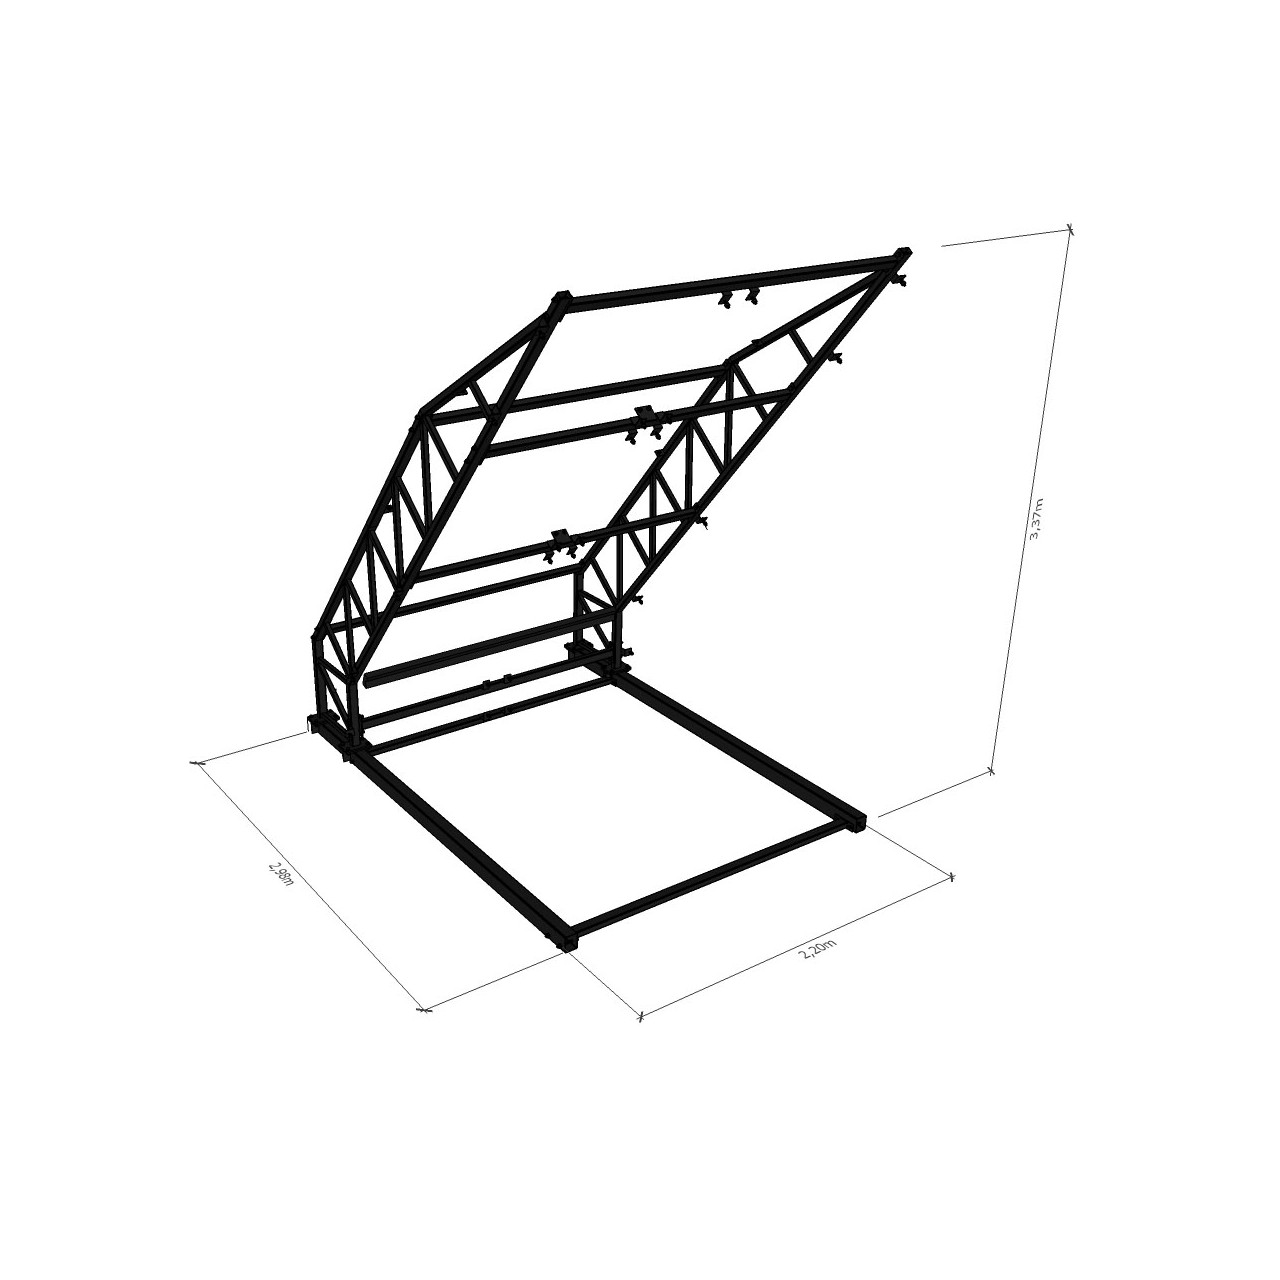 Frame of Freestanding Moonboard 40' or 25' DIY